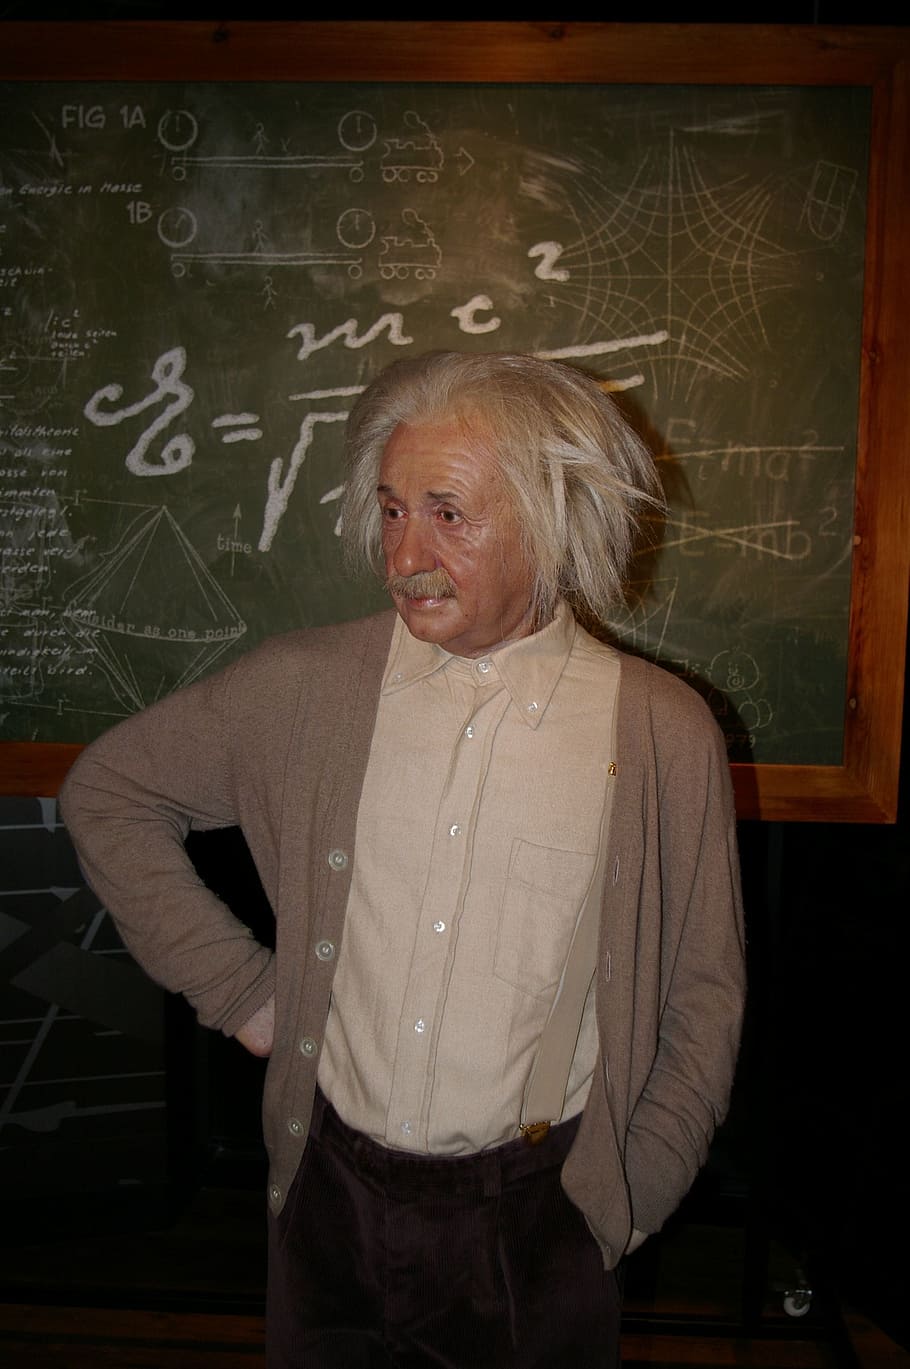 albert einstein costume, Wax Figure, Berlin, Einstein, blackboard, classroom, education, people, one Person, learning